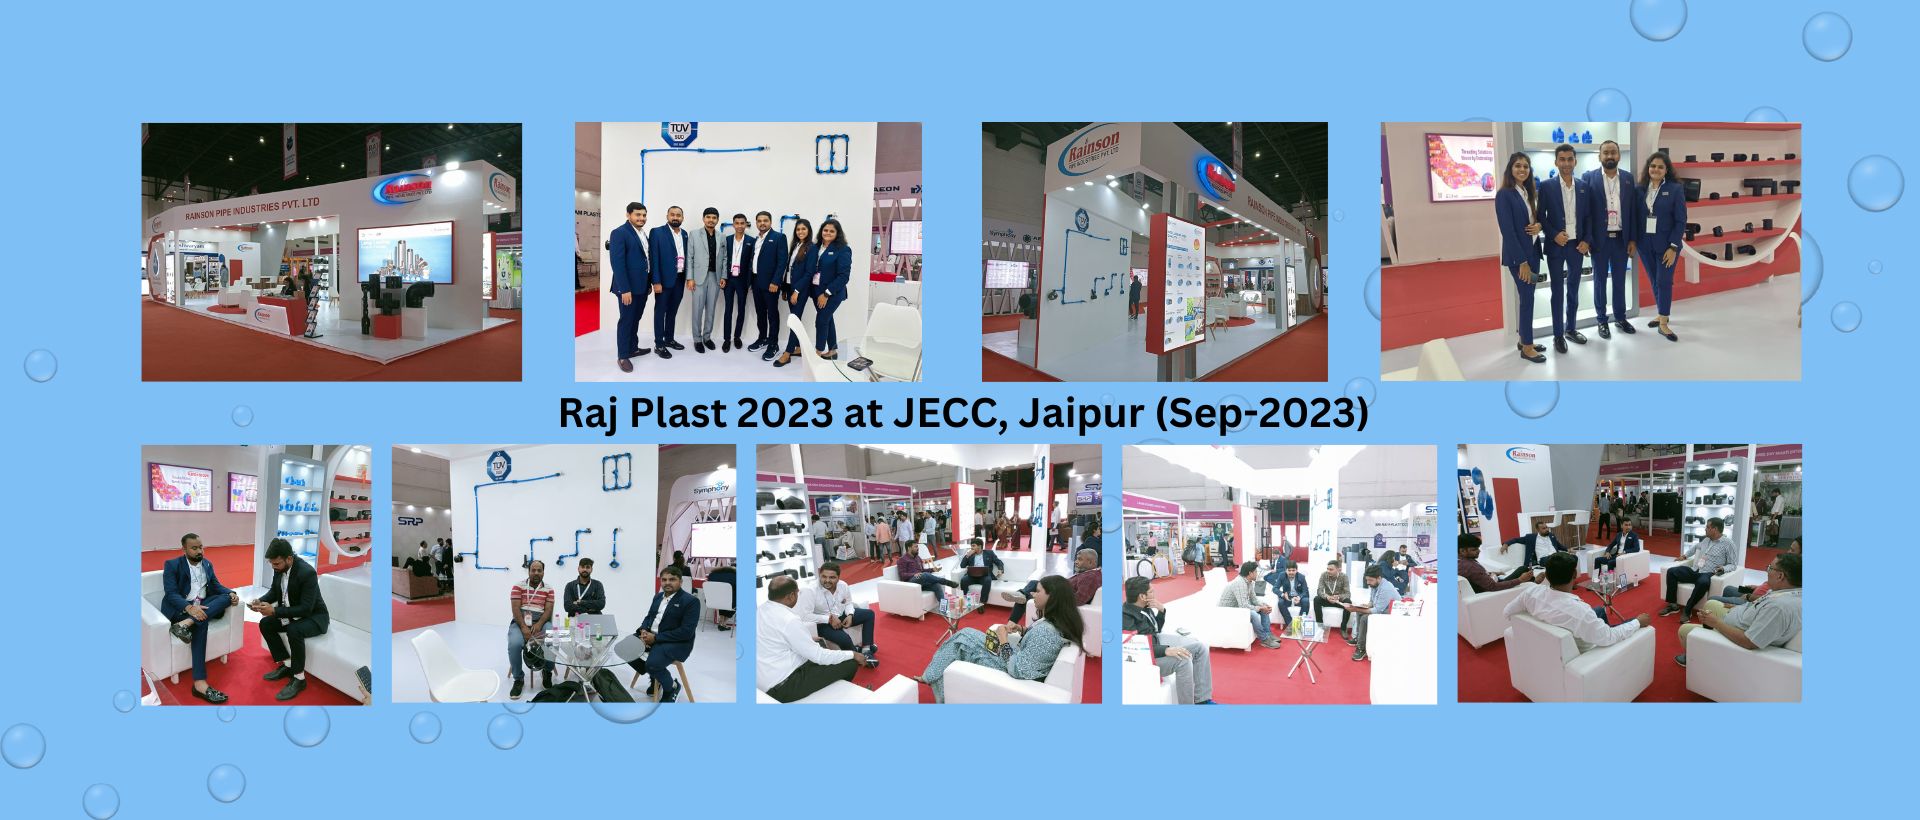 Raj Plast Exhibition Jaipur Sep-2023